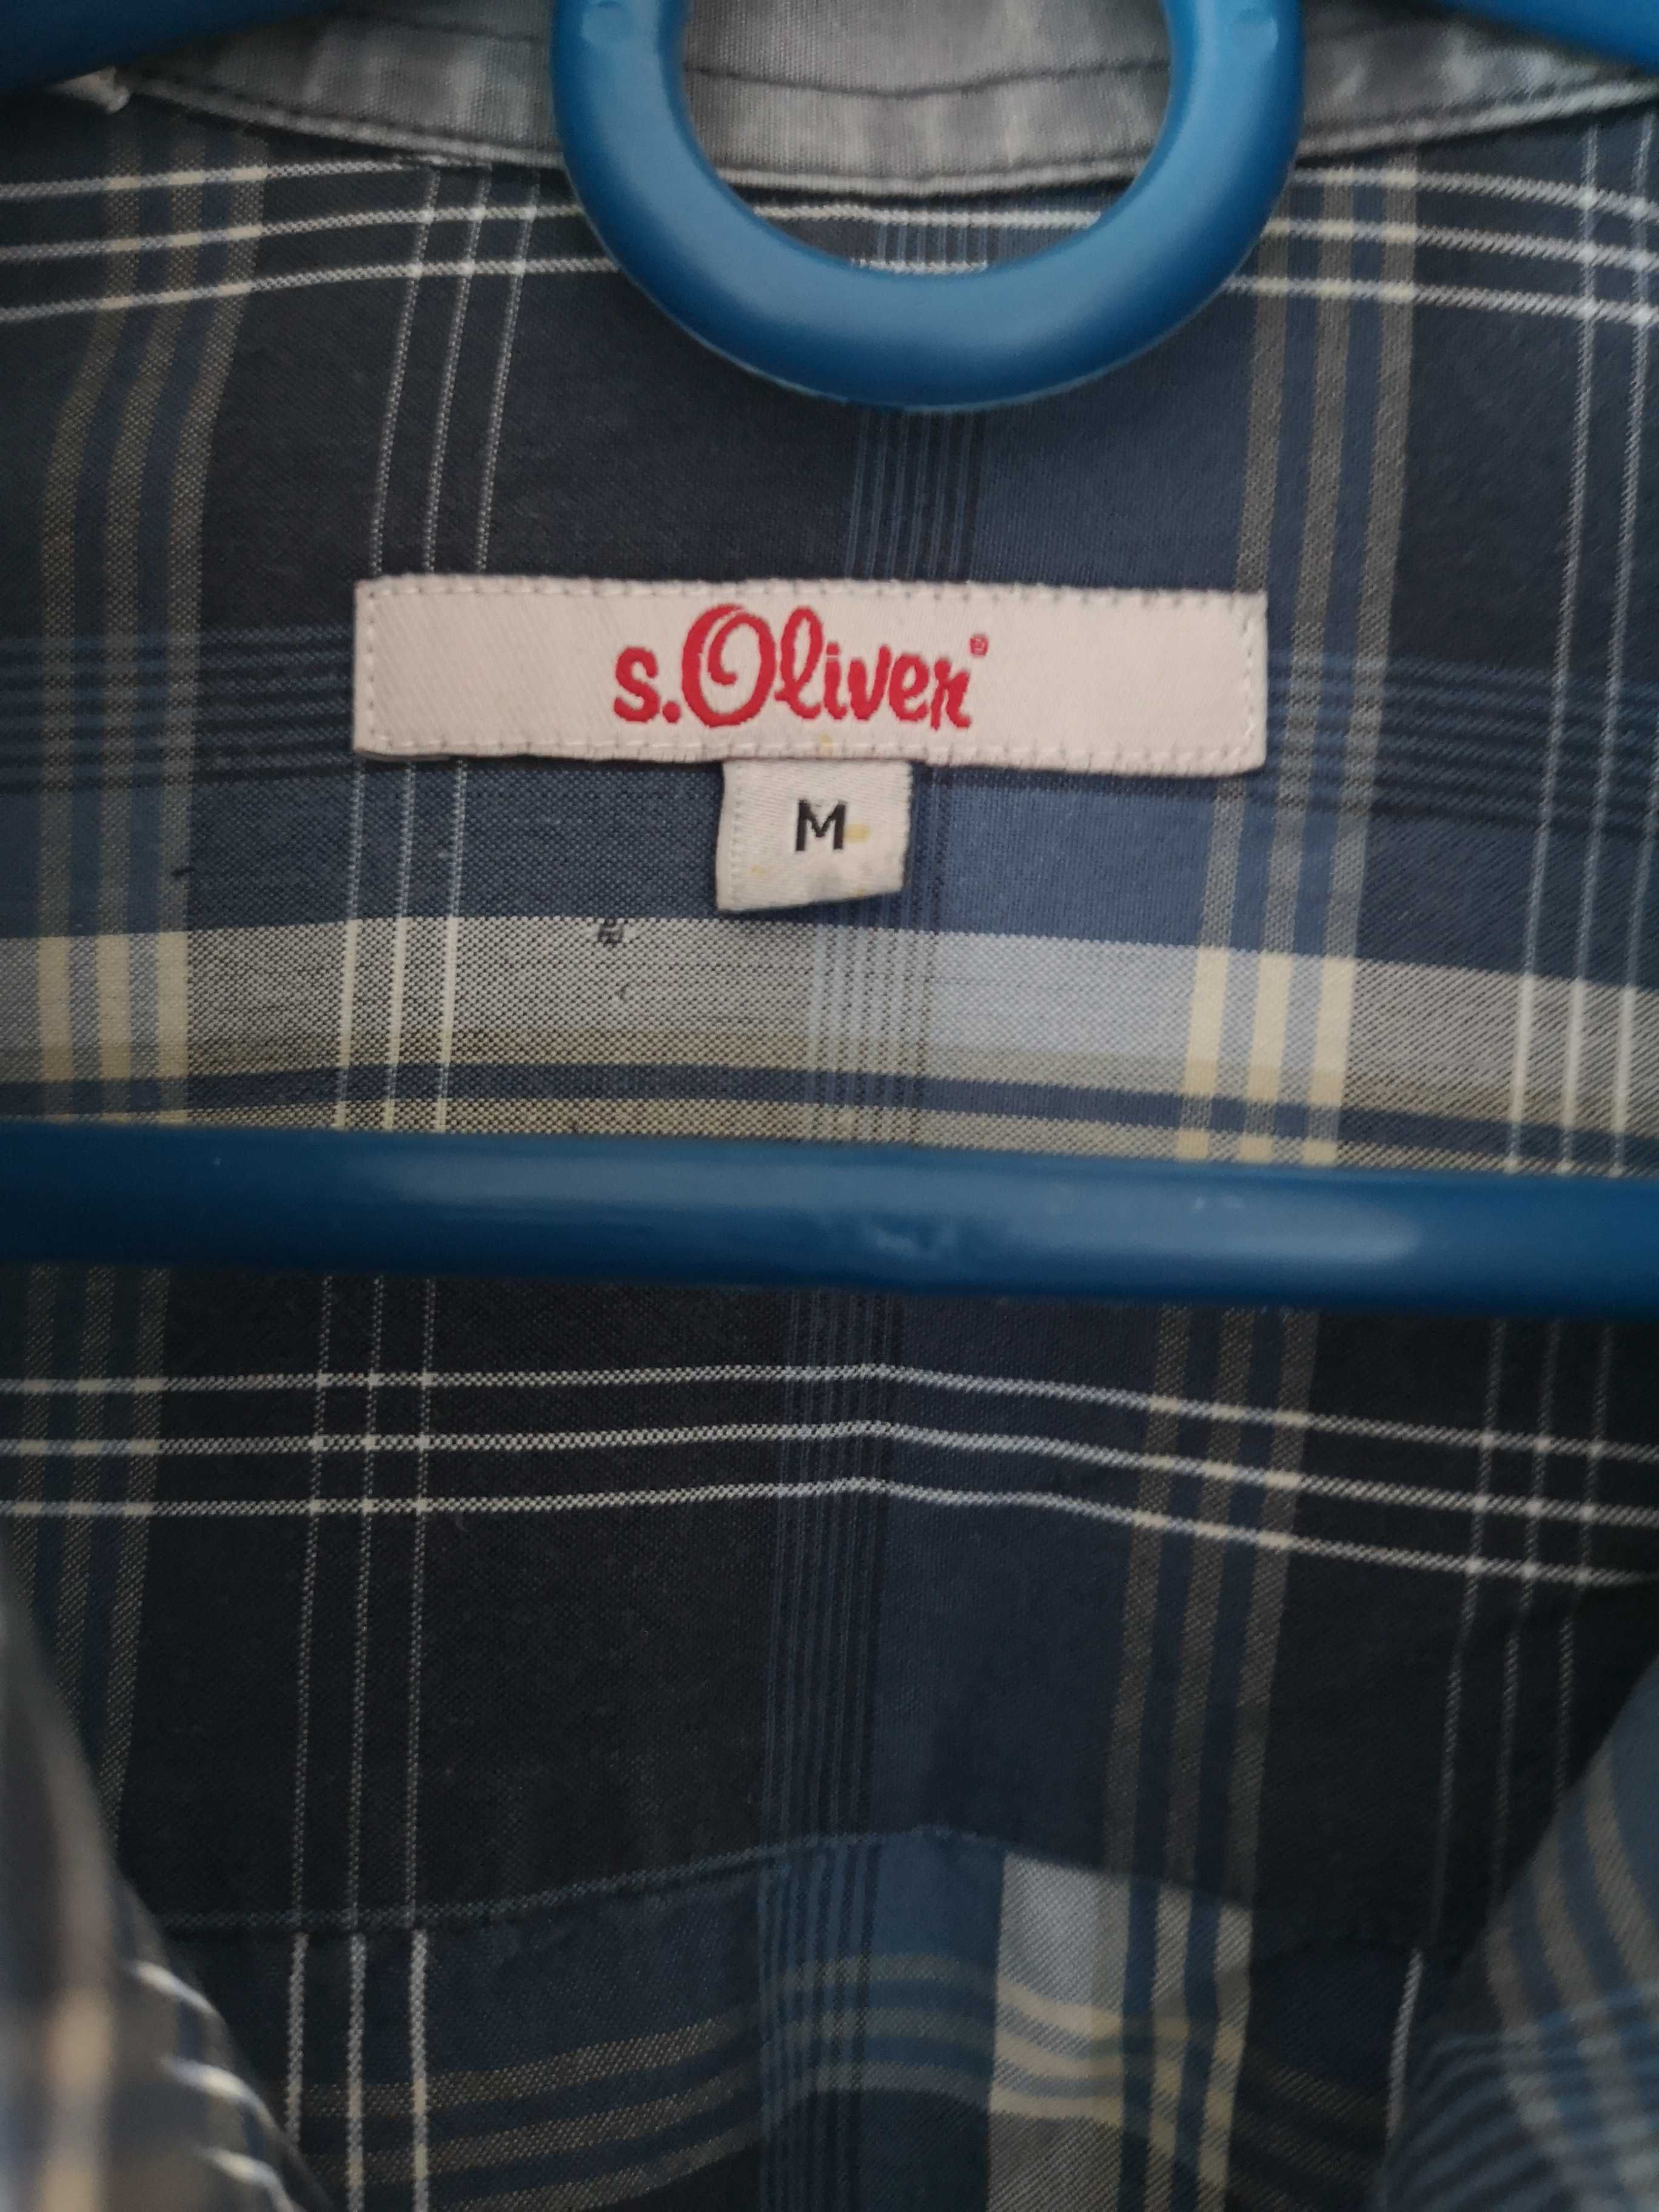 S.Oliver koszula w kratkę niebieska lato 38/M